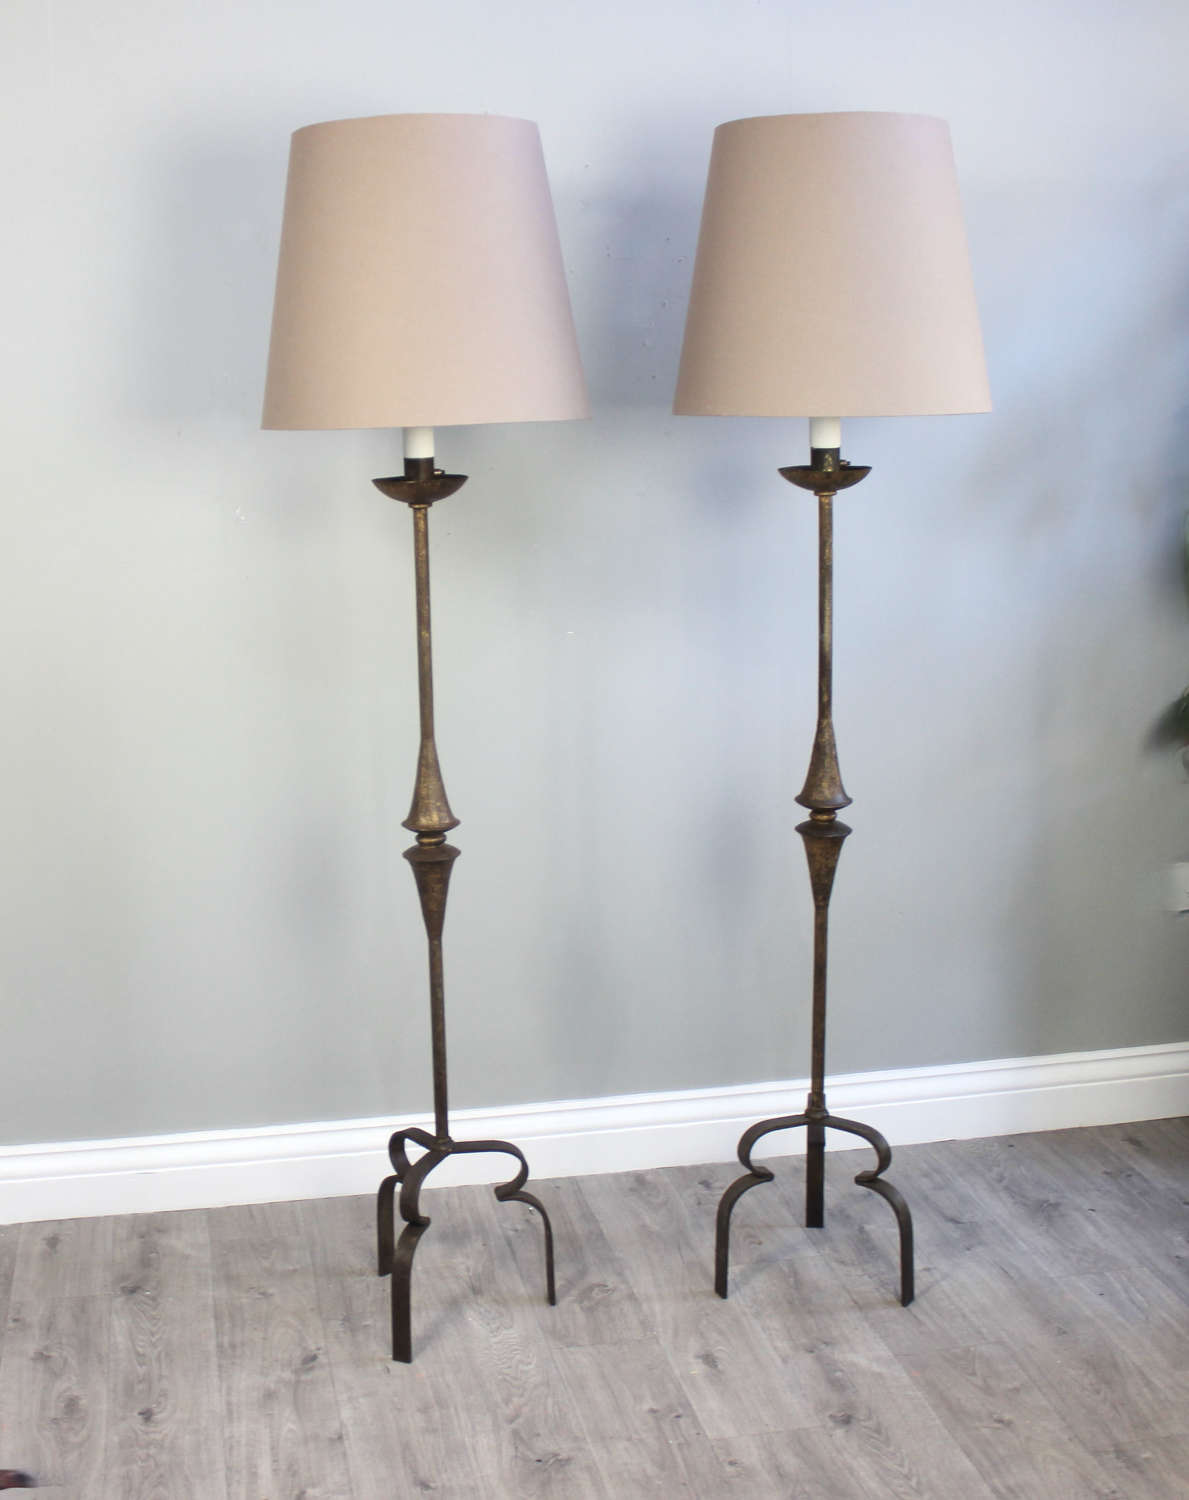 Two pairs of elegant Spanish floor lamps